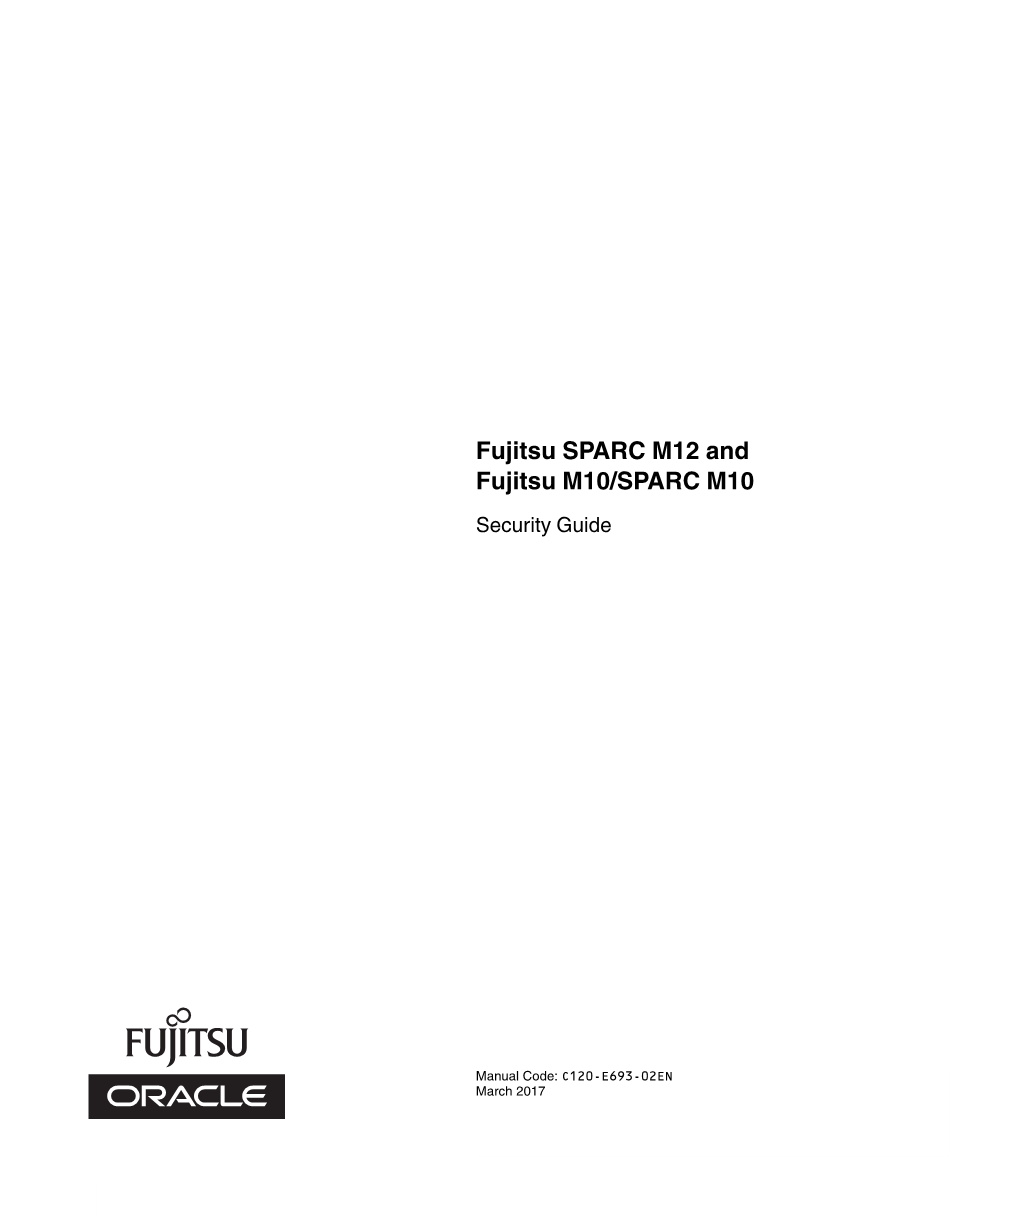 Fujitsu SPARC M12 and Fujitsu M10/SPARC M10 Security Guide･March 2017 Fujitsu SPARC M12 and Fujitsu M10/SPARC M10 Security